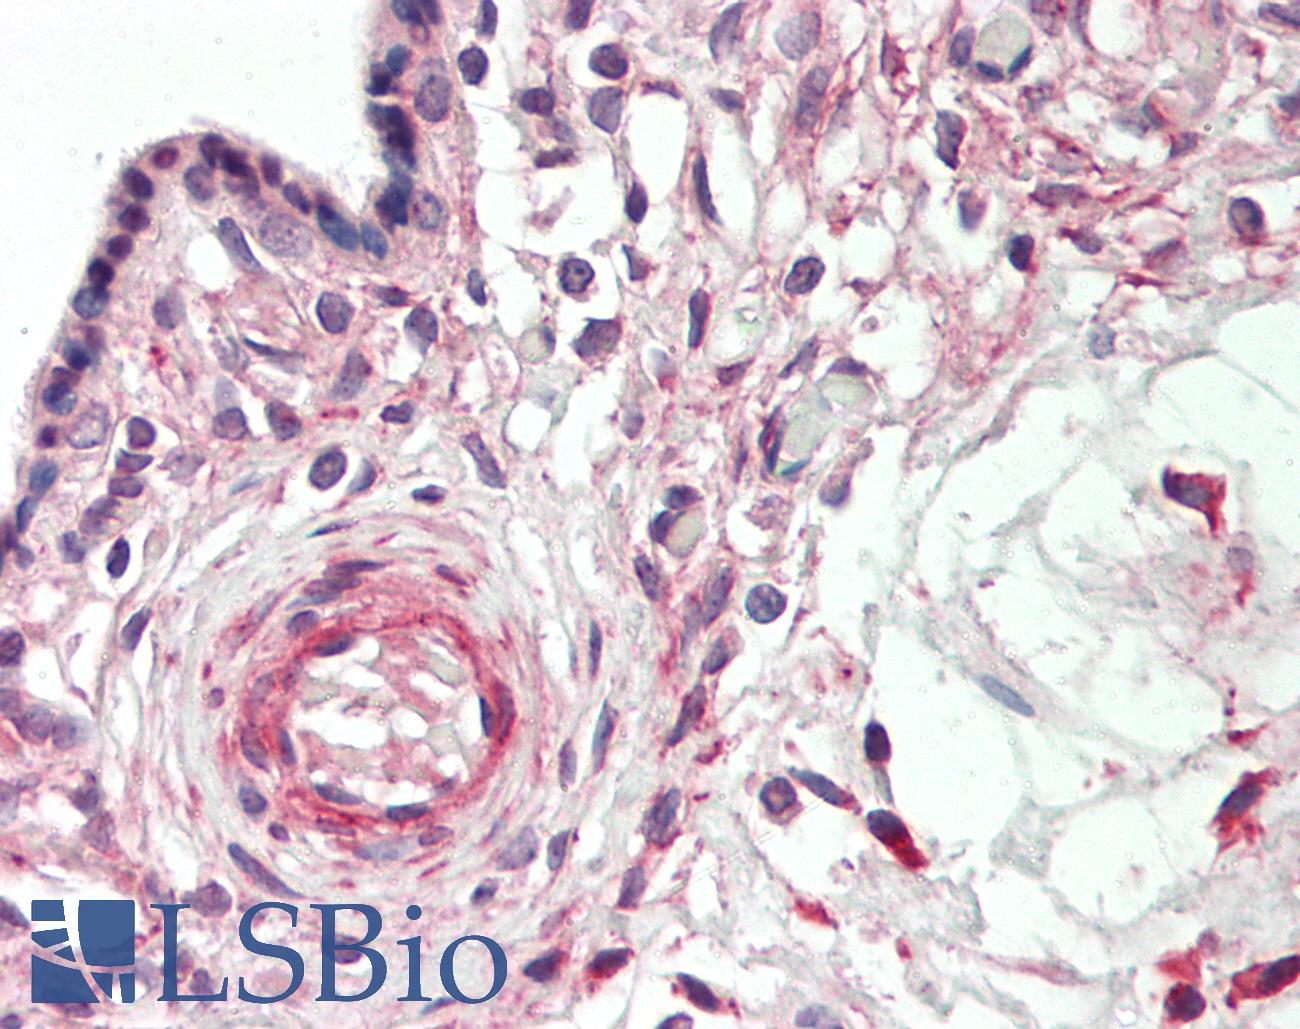 BACH1 Antibody - Human Placenta: Formalin-Fixed, Paraffin-Embedded (FFPE)